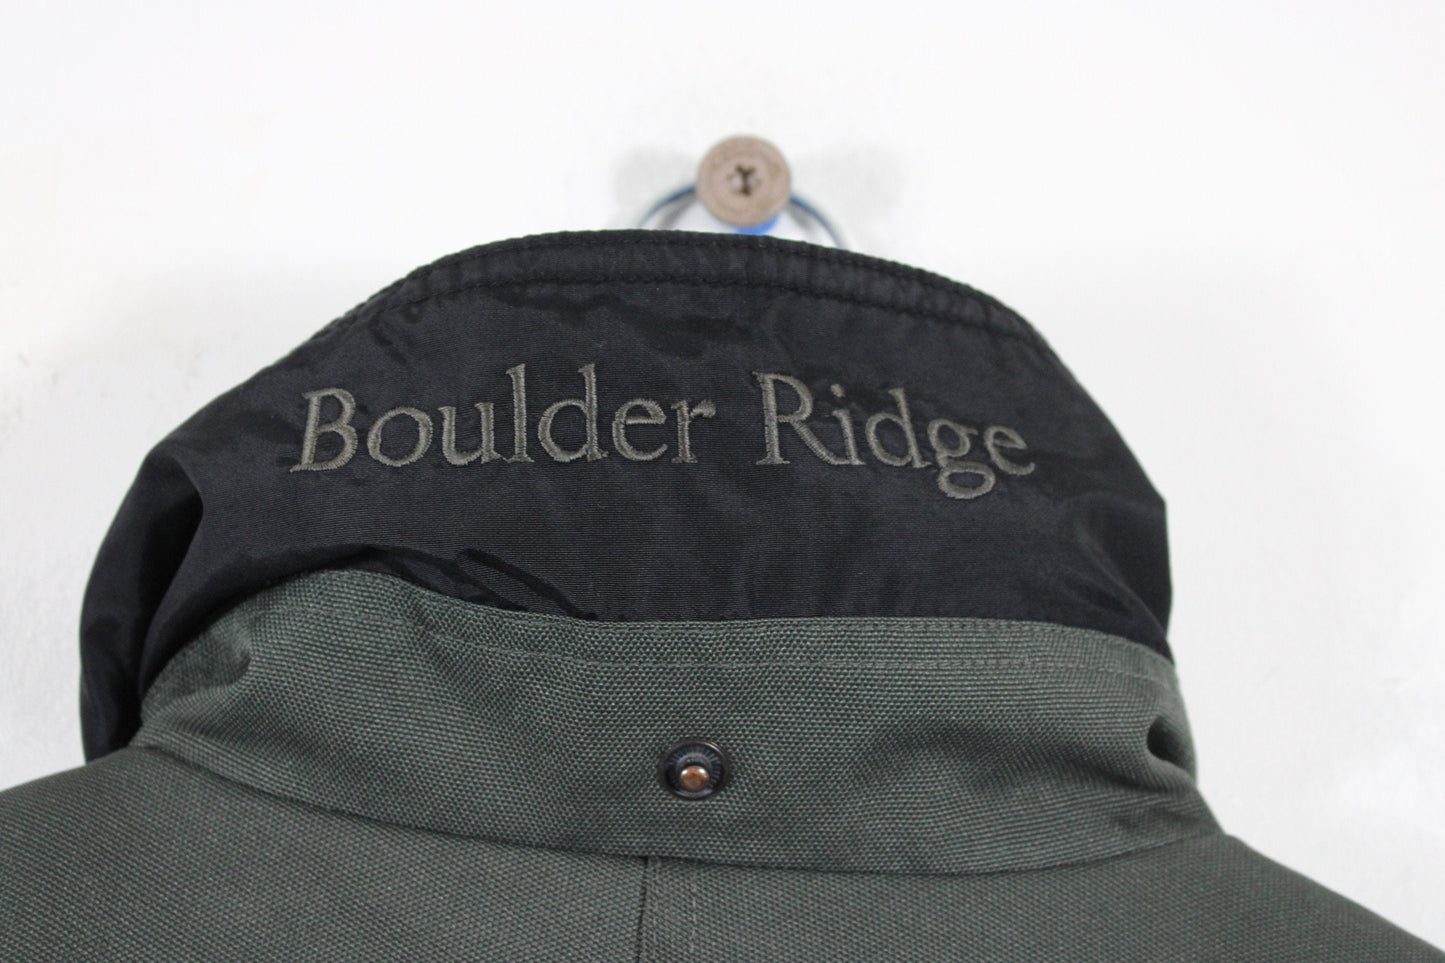 Columbia Anorak-Jacket / Vintage 90s Boulder Ridge Outerwear Shell Coat